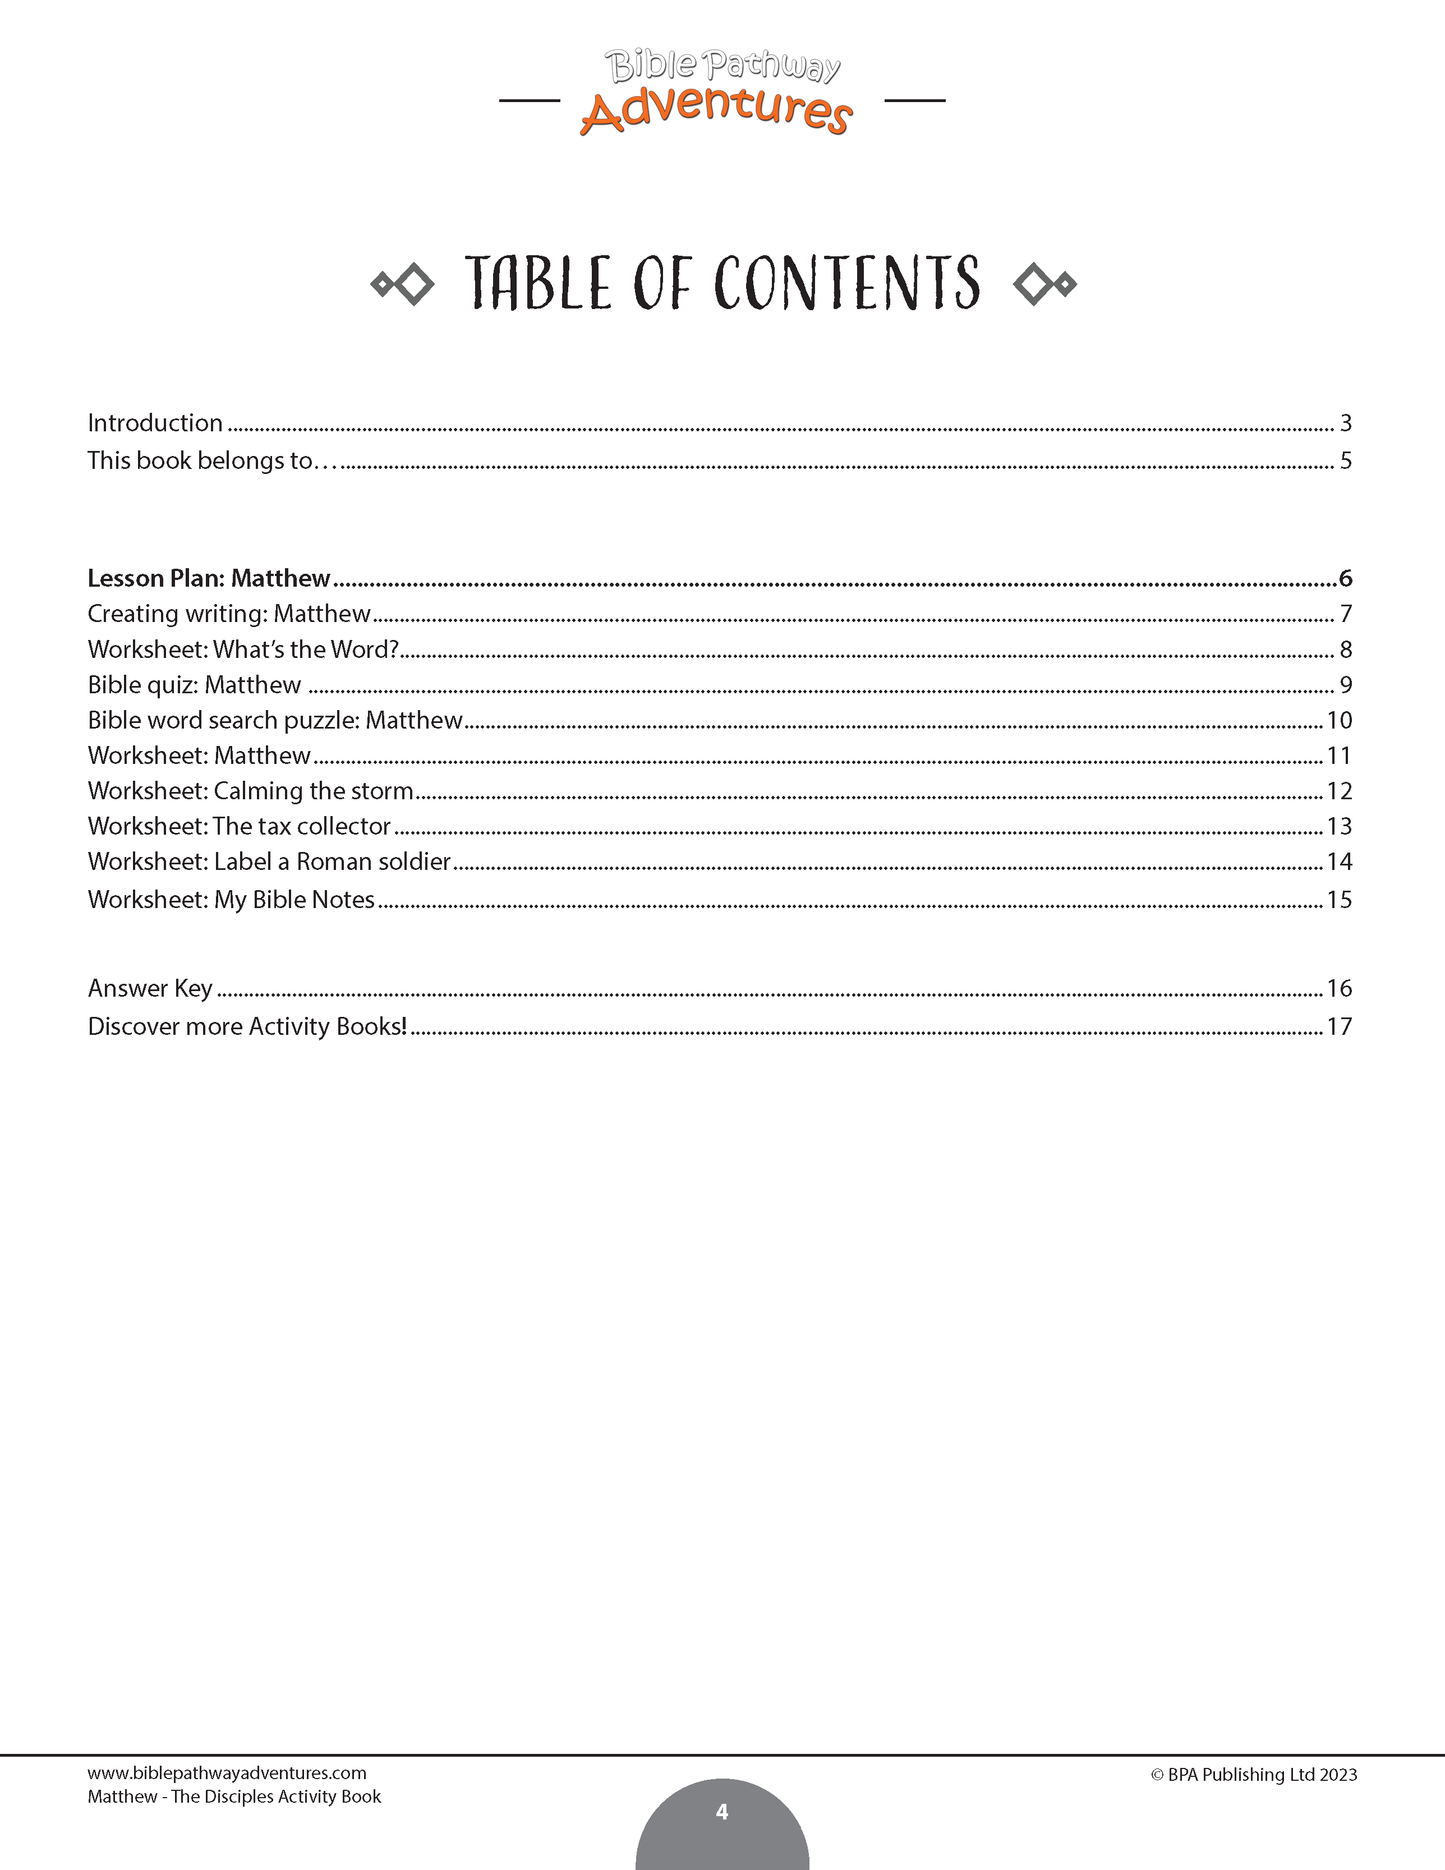 Matthew: The Disciple Activity Book (PDF)